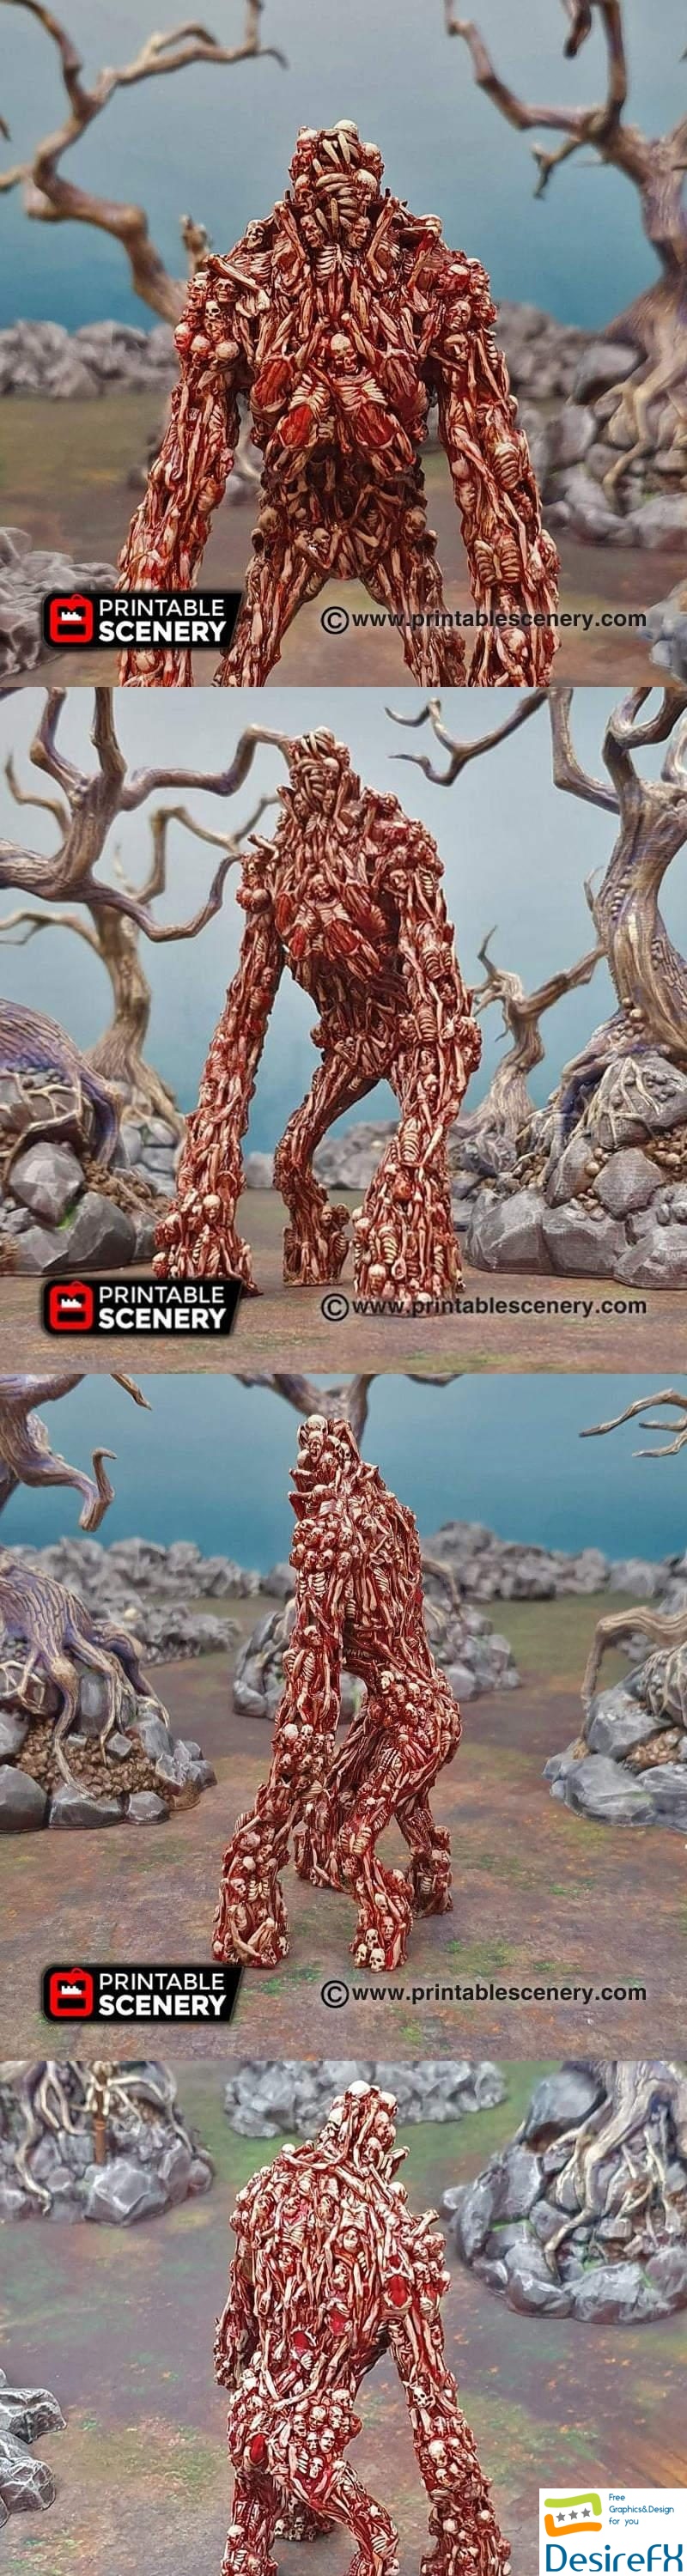 Printable Scenery - Corpse Giant - 3D Print